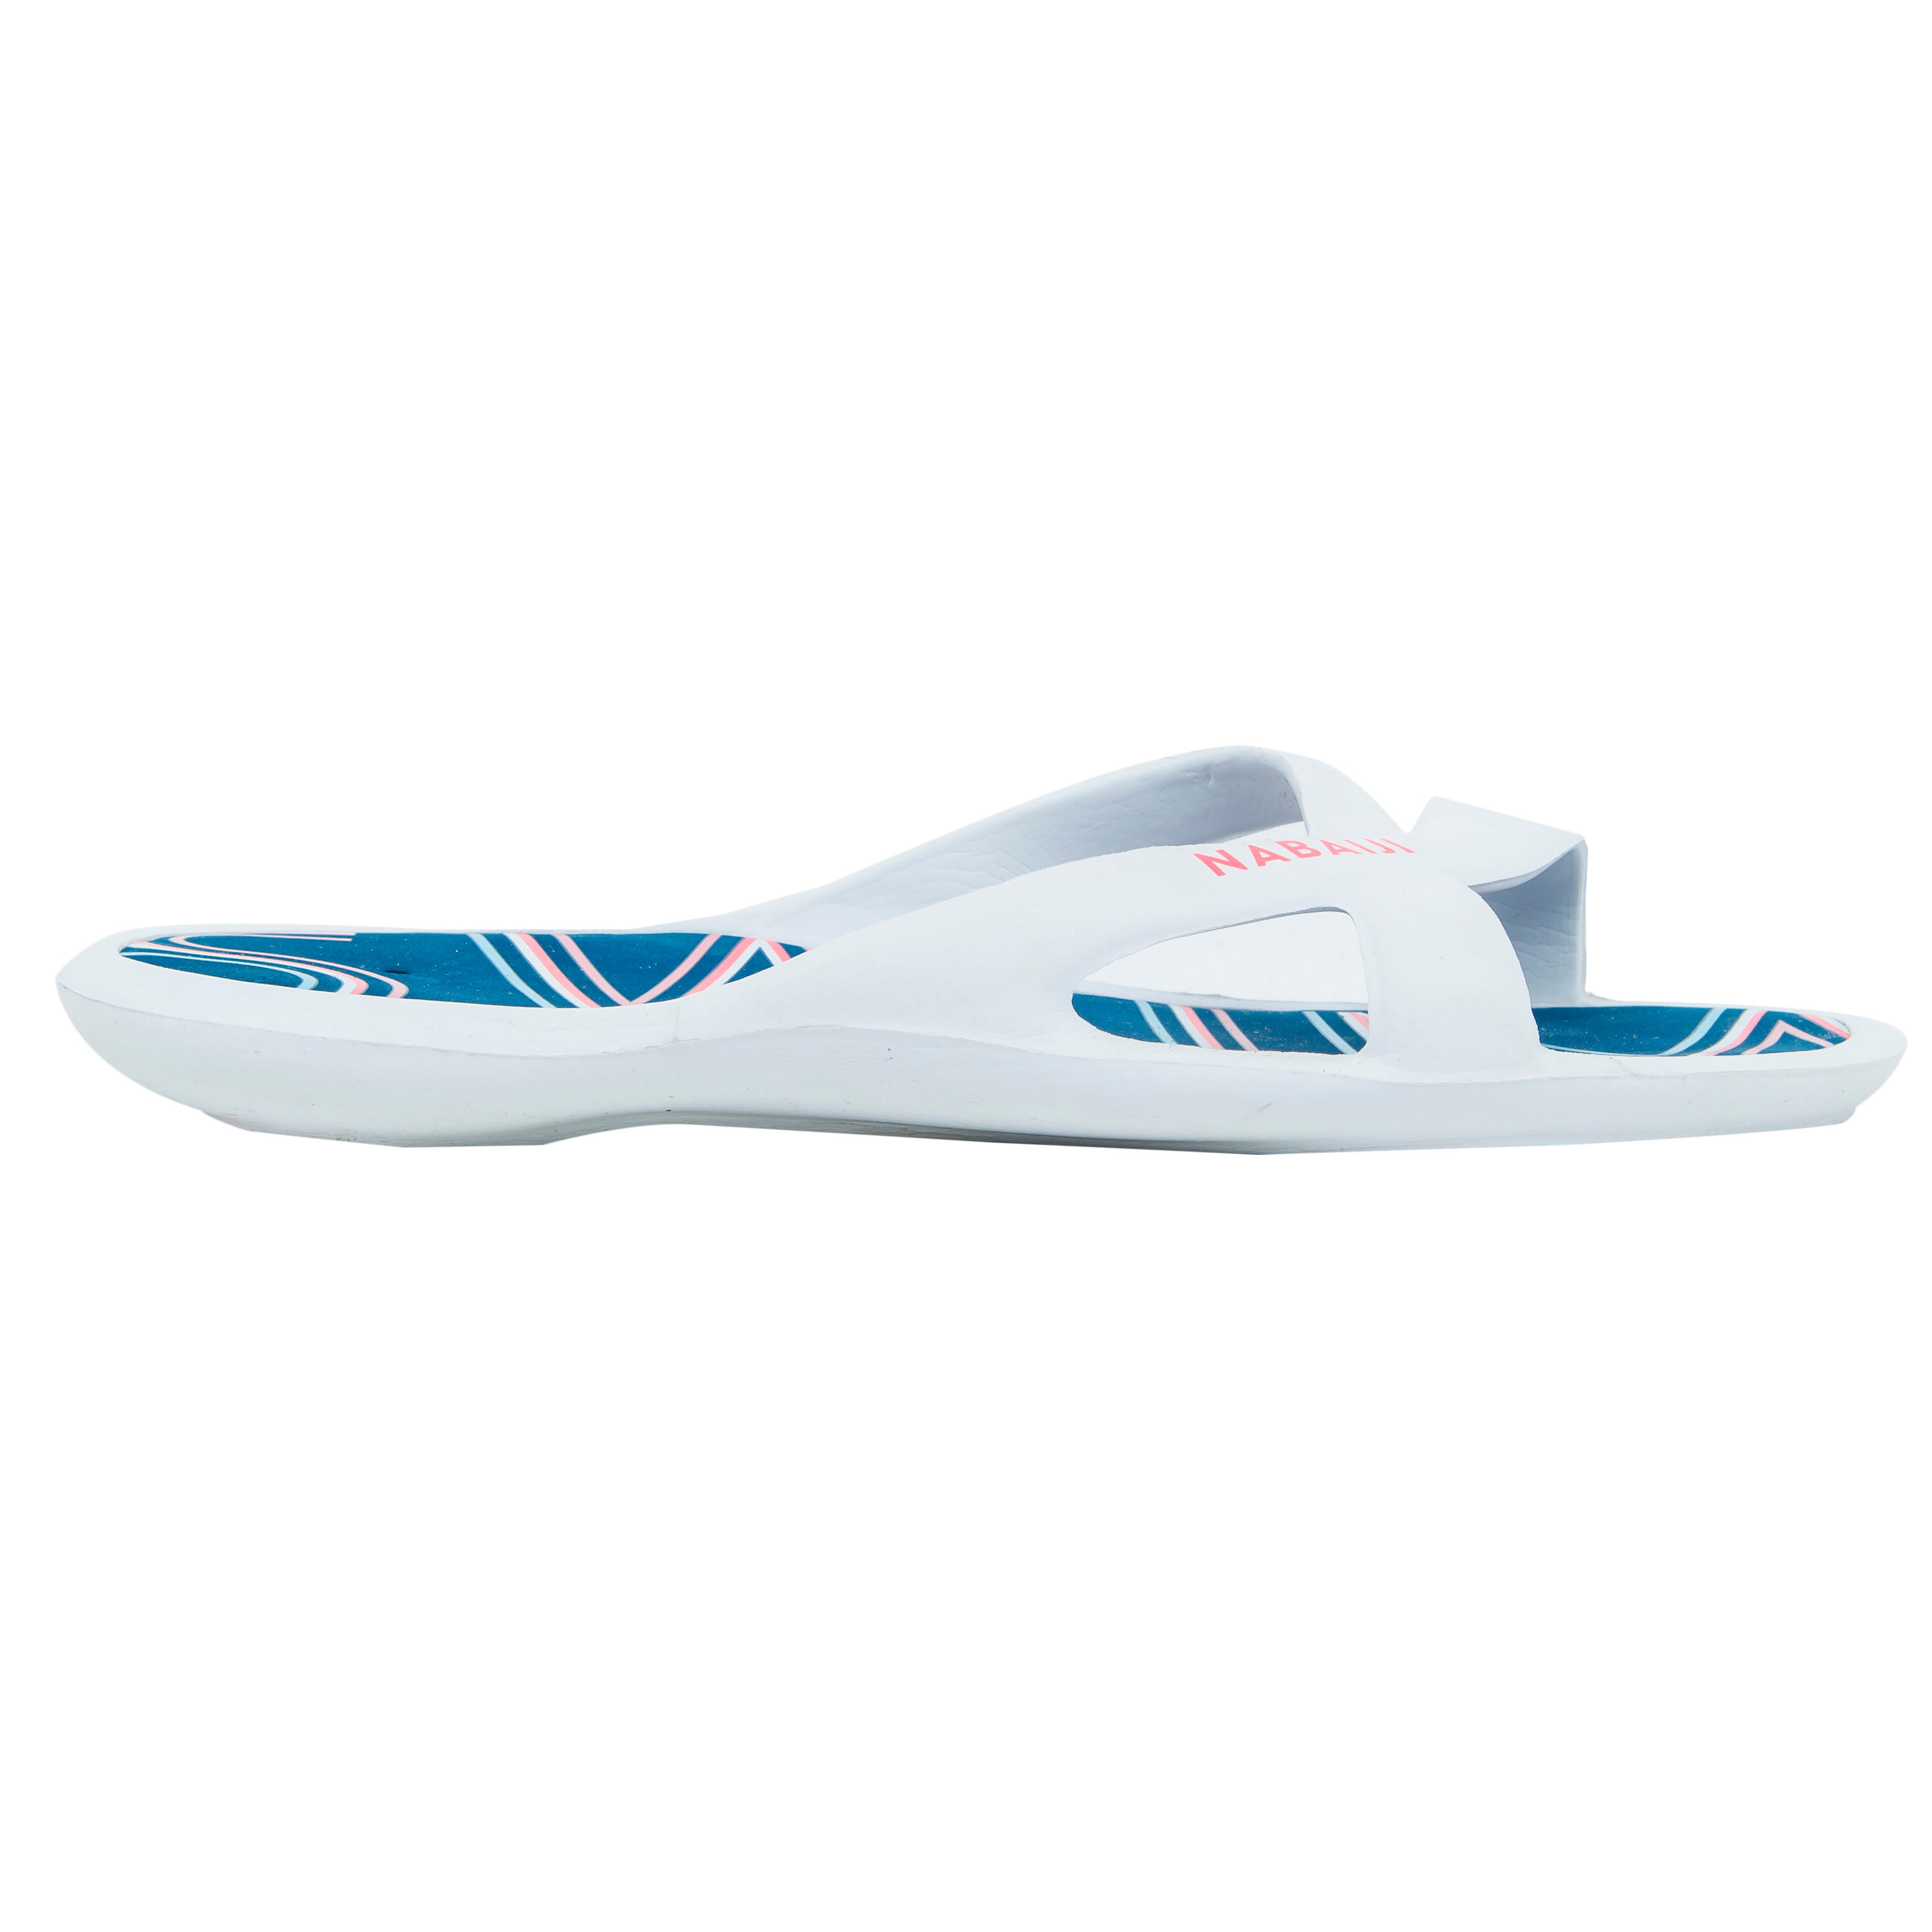 Women's pool sandals - Slap 500 print - Swim white blue 4/4